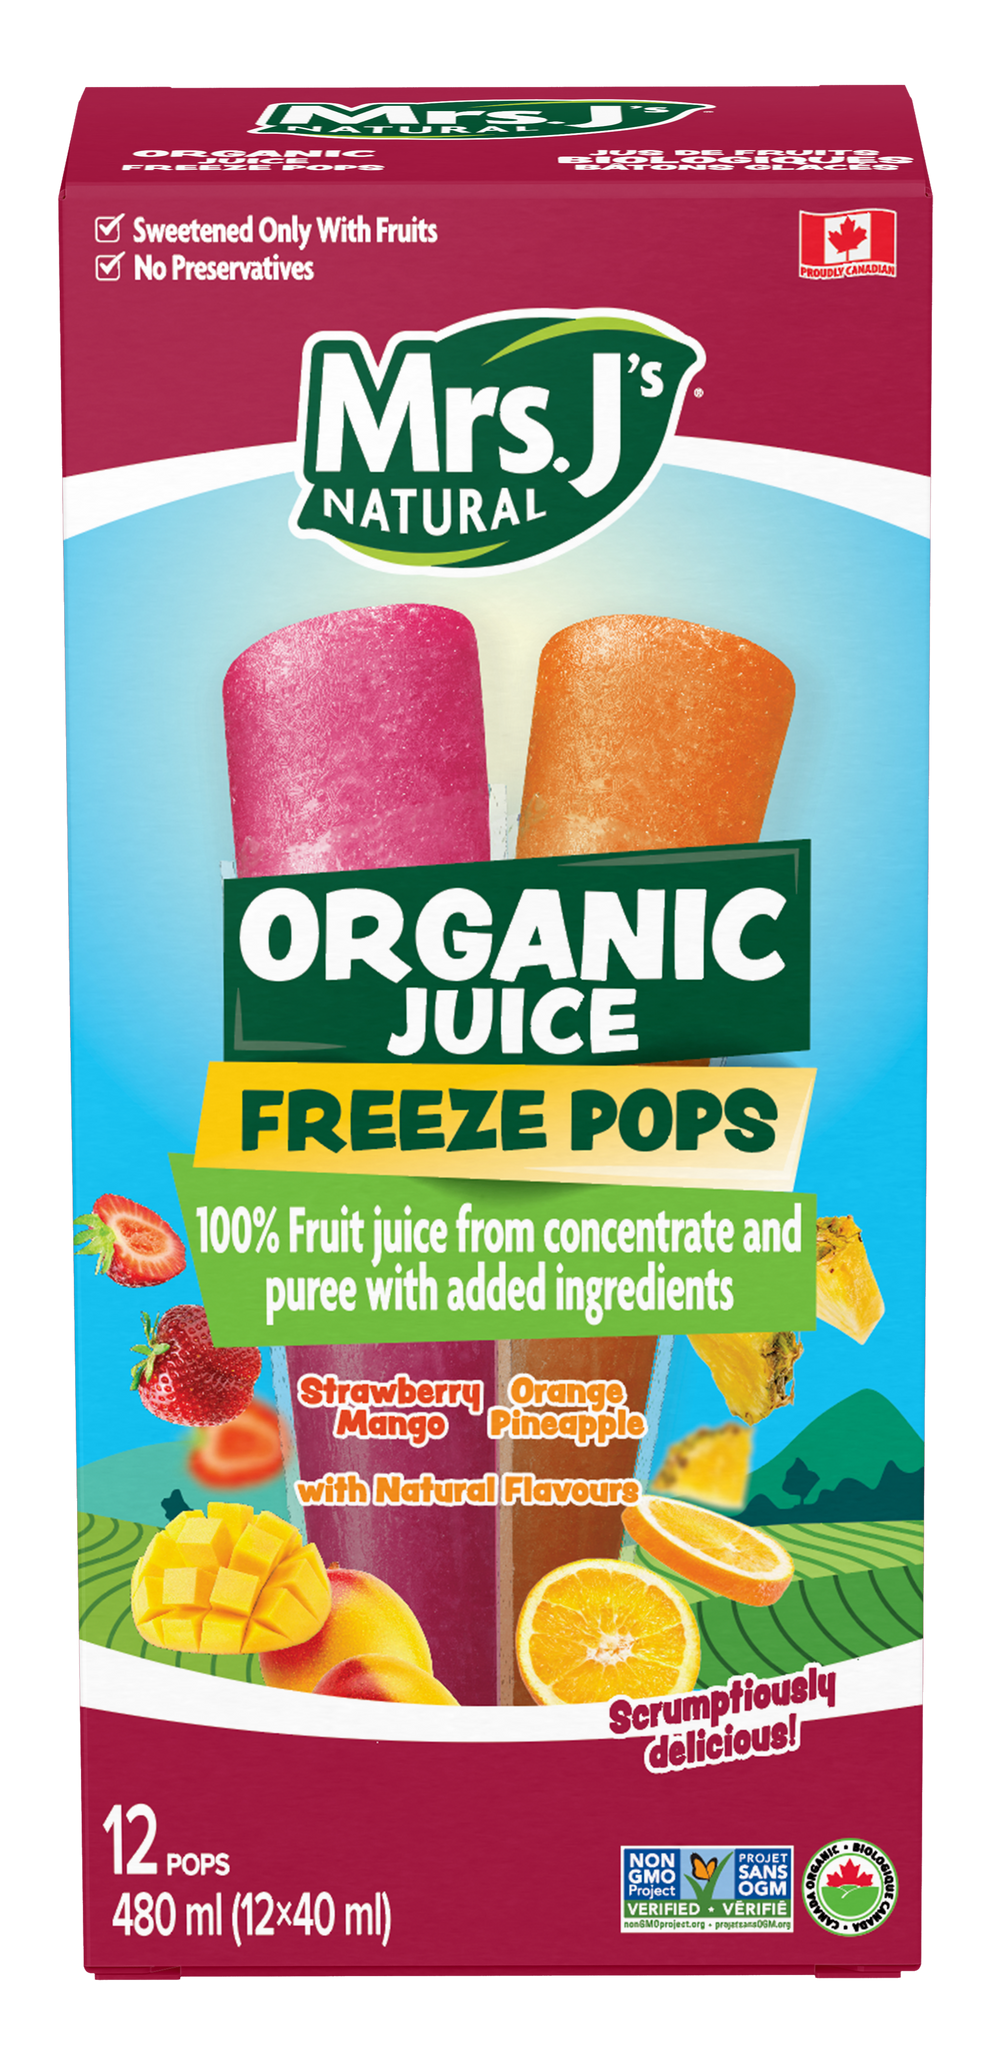 Mrs. J's Natural Strawberry Mango & Orange Pineapple Organic Juice Pops